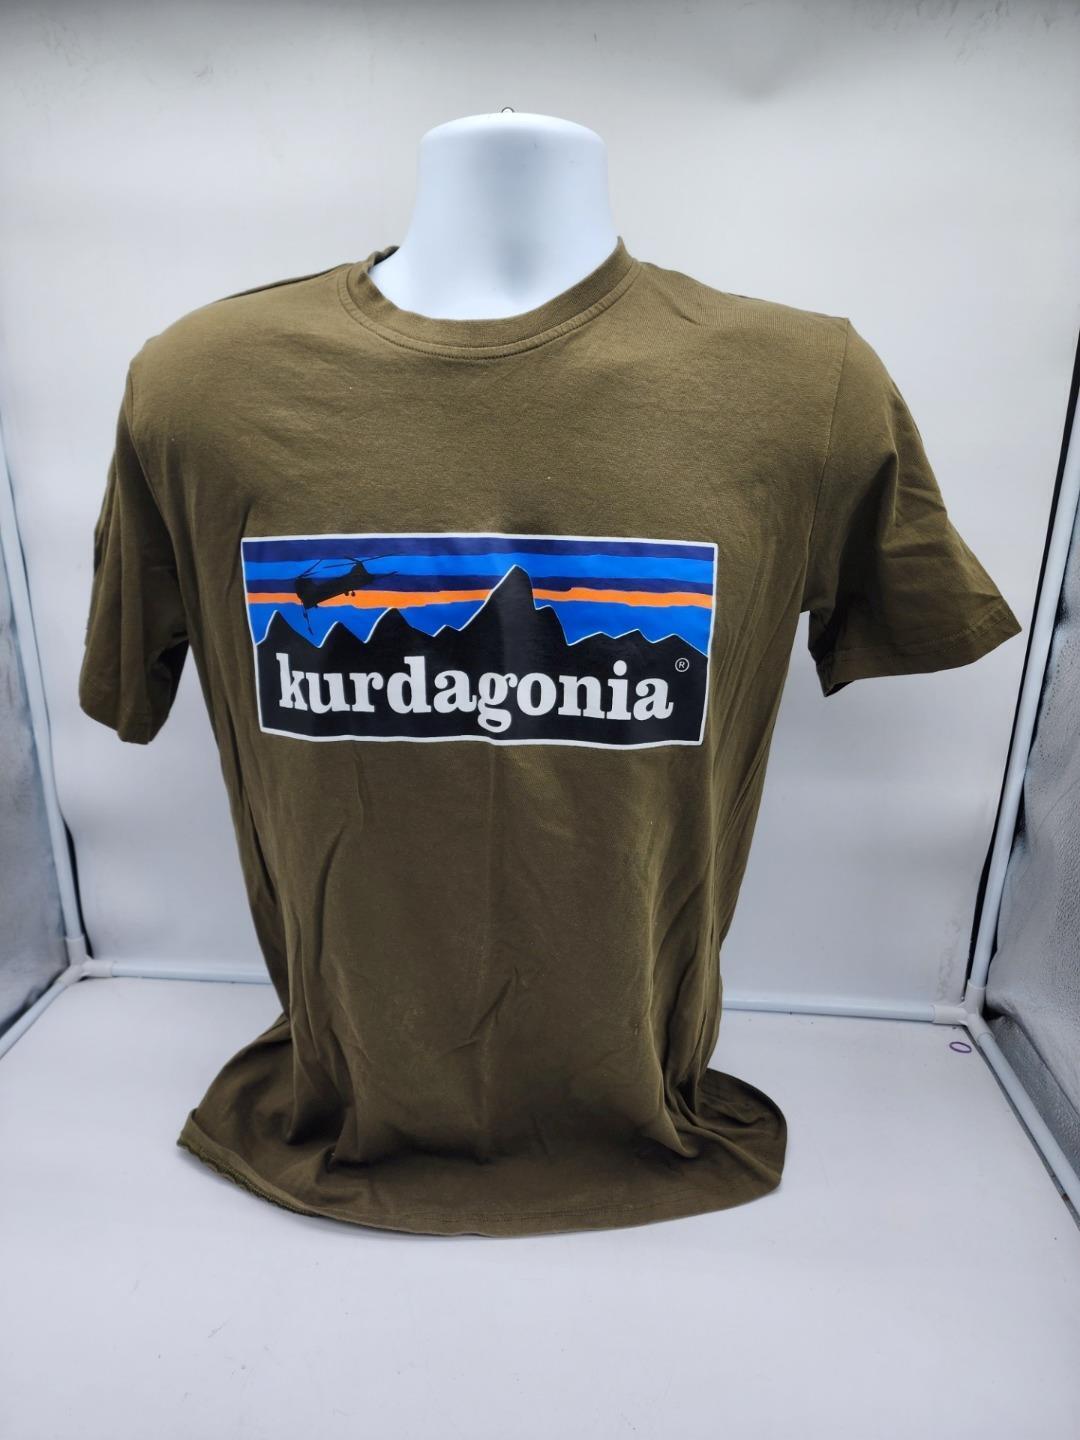 Kurdagonia Military Special Operations Iraq OIF Morale Small T-Shirt Flag Rare